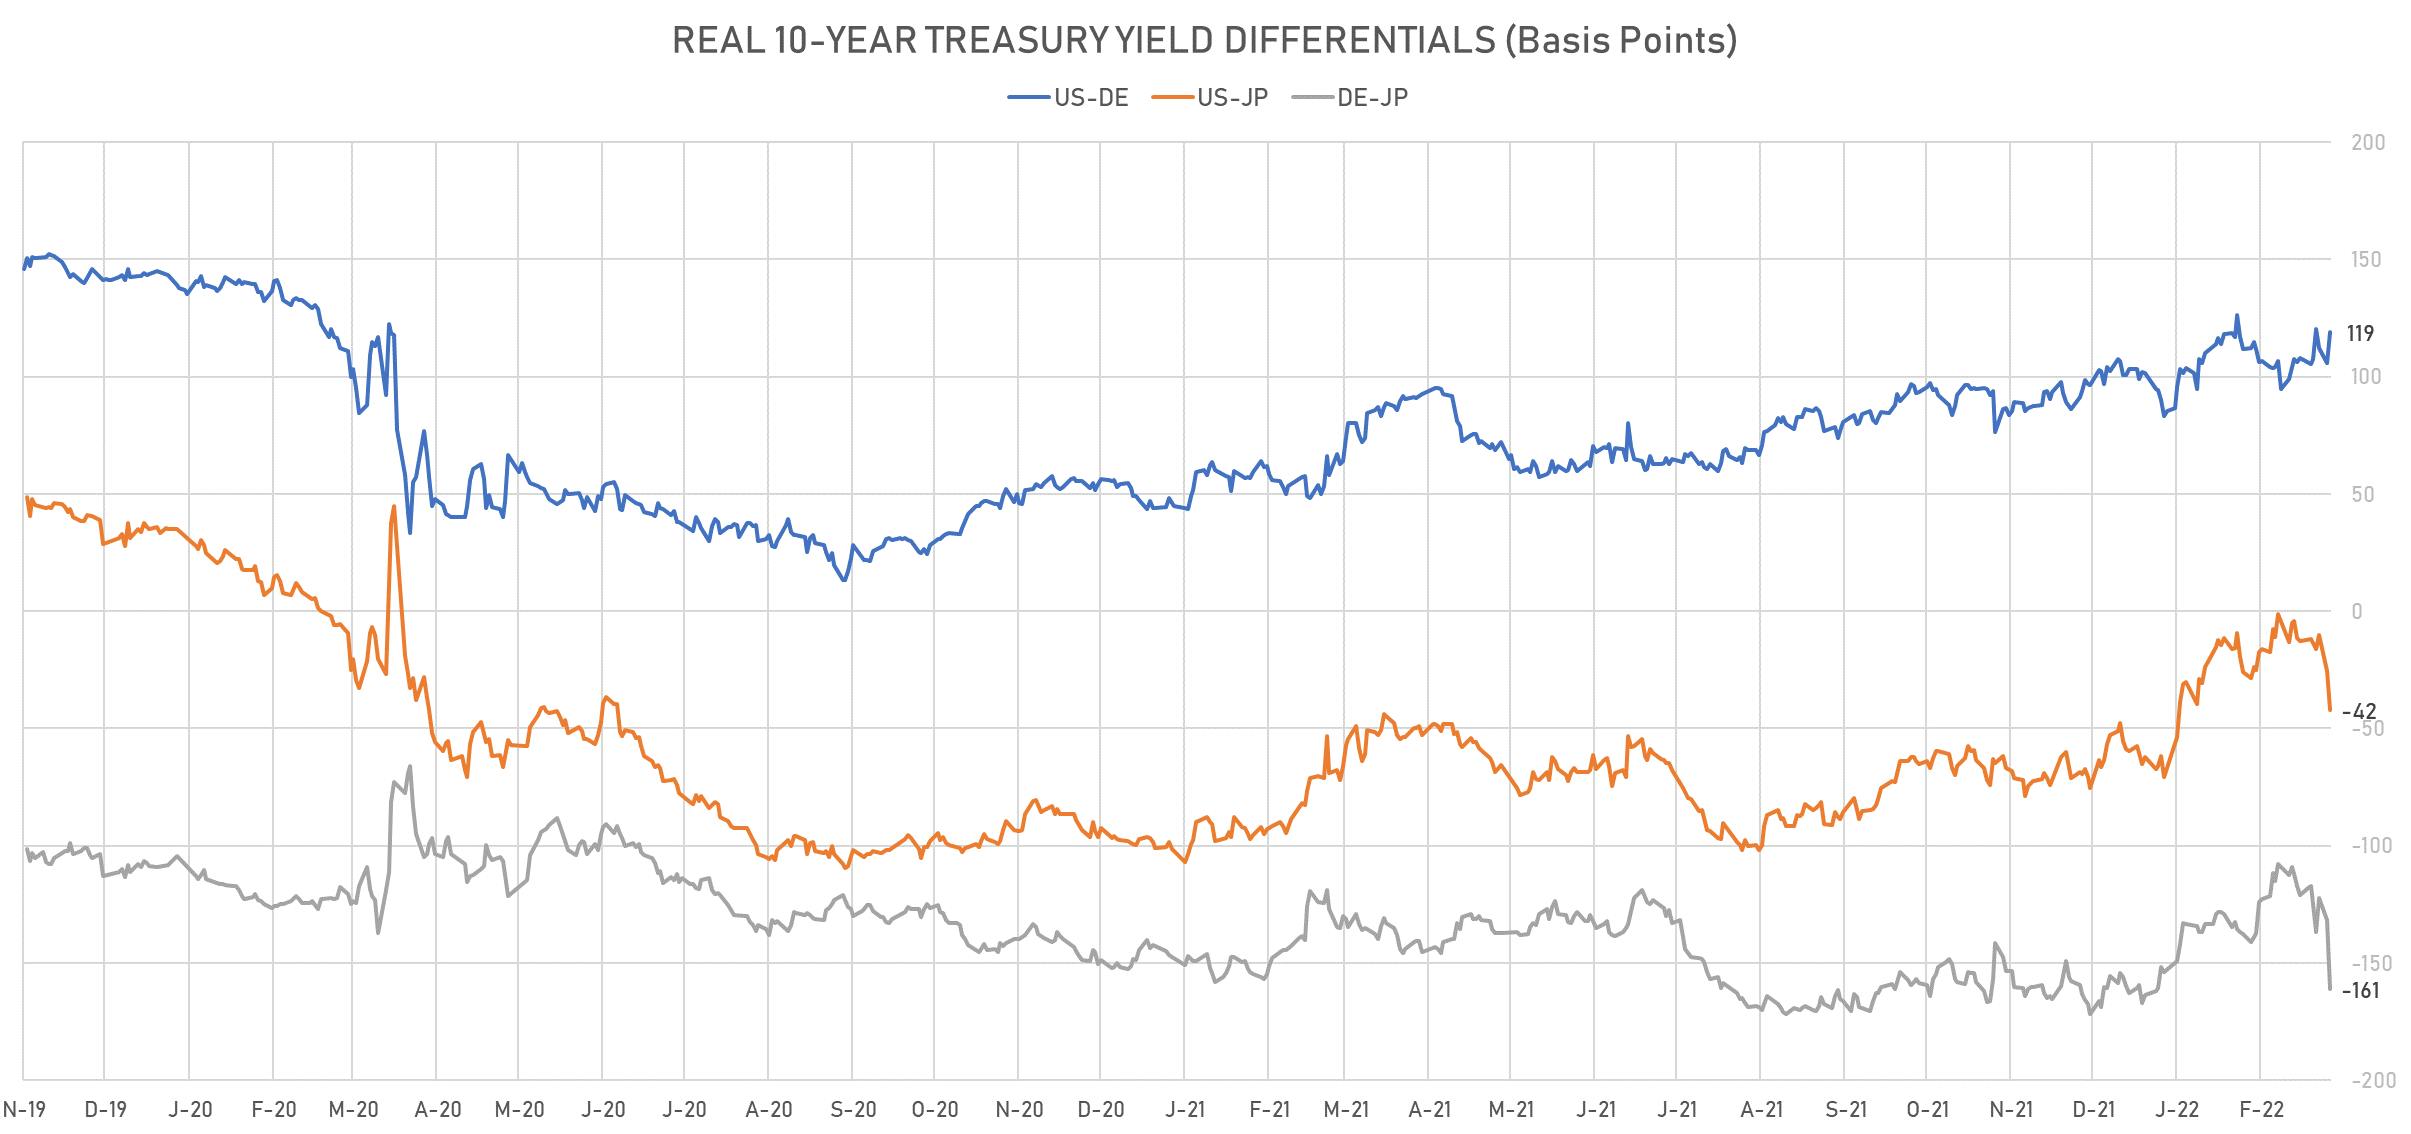 US DE JP 10Y Real Yields Differentials | Sources: phipost.com, Refinitiv data